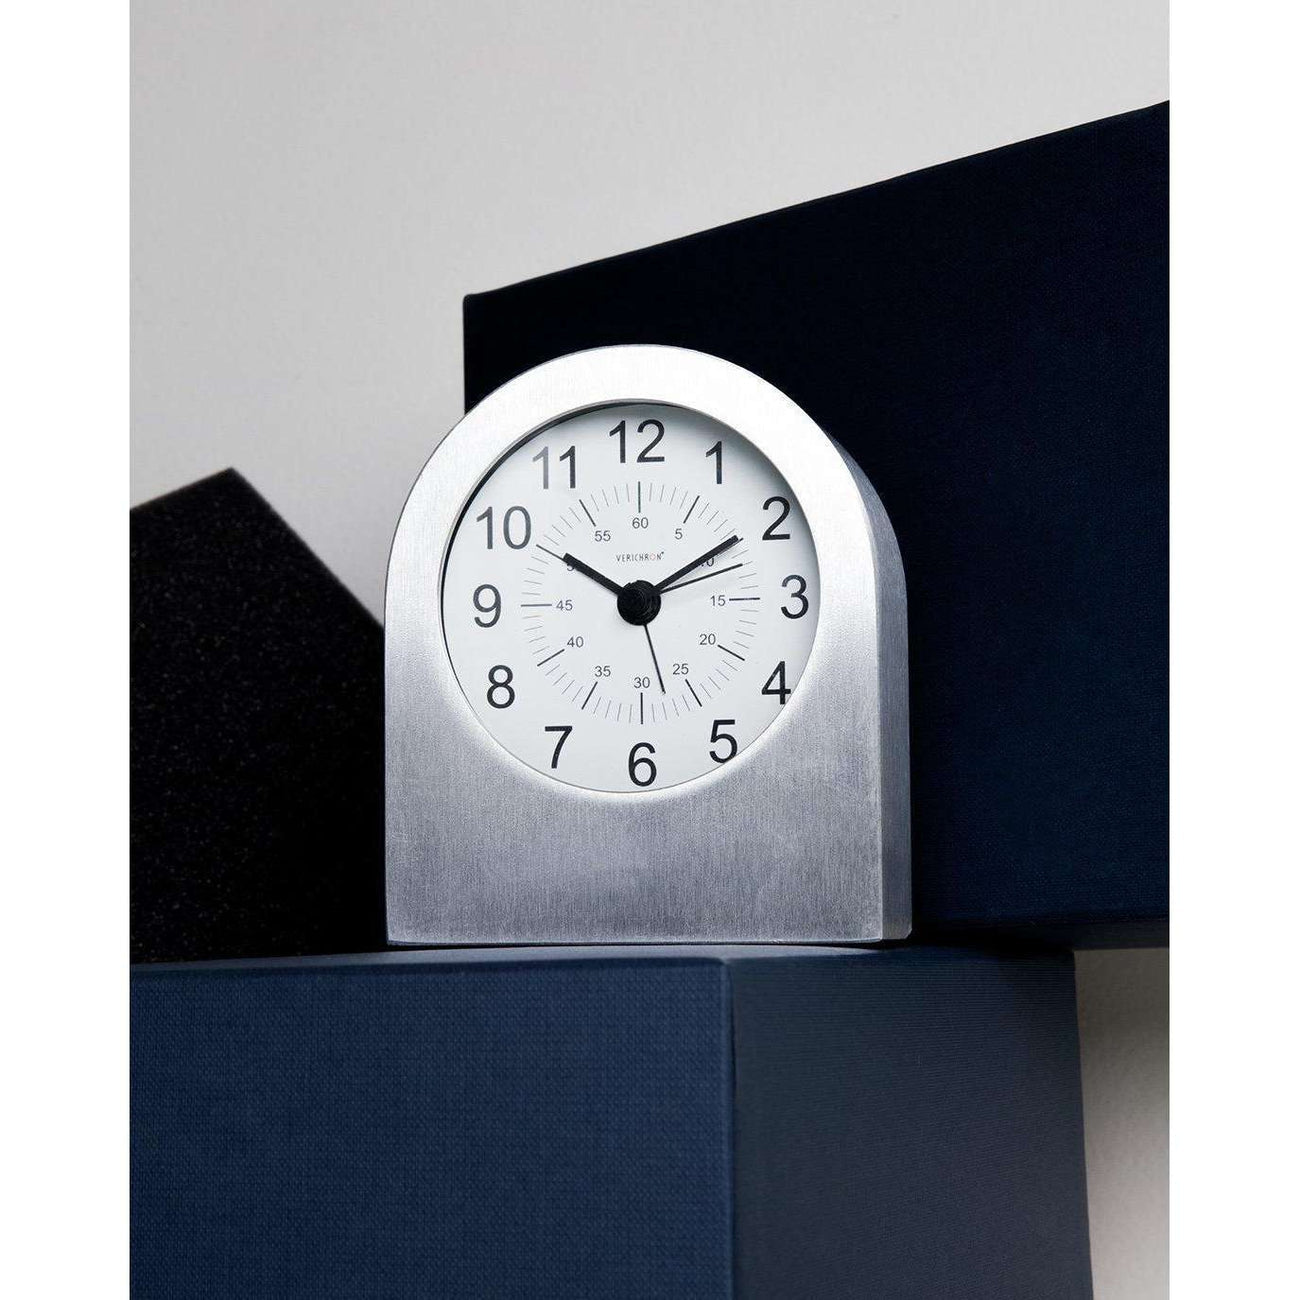 Spegia Clock-France & Son-K90-Clocks-1-France and Son